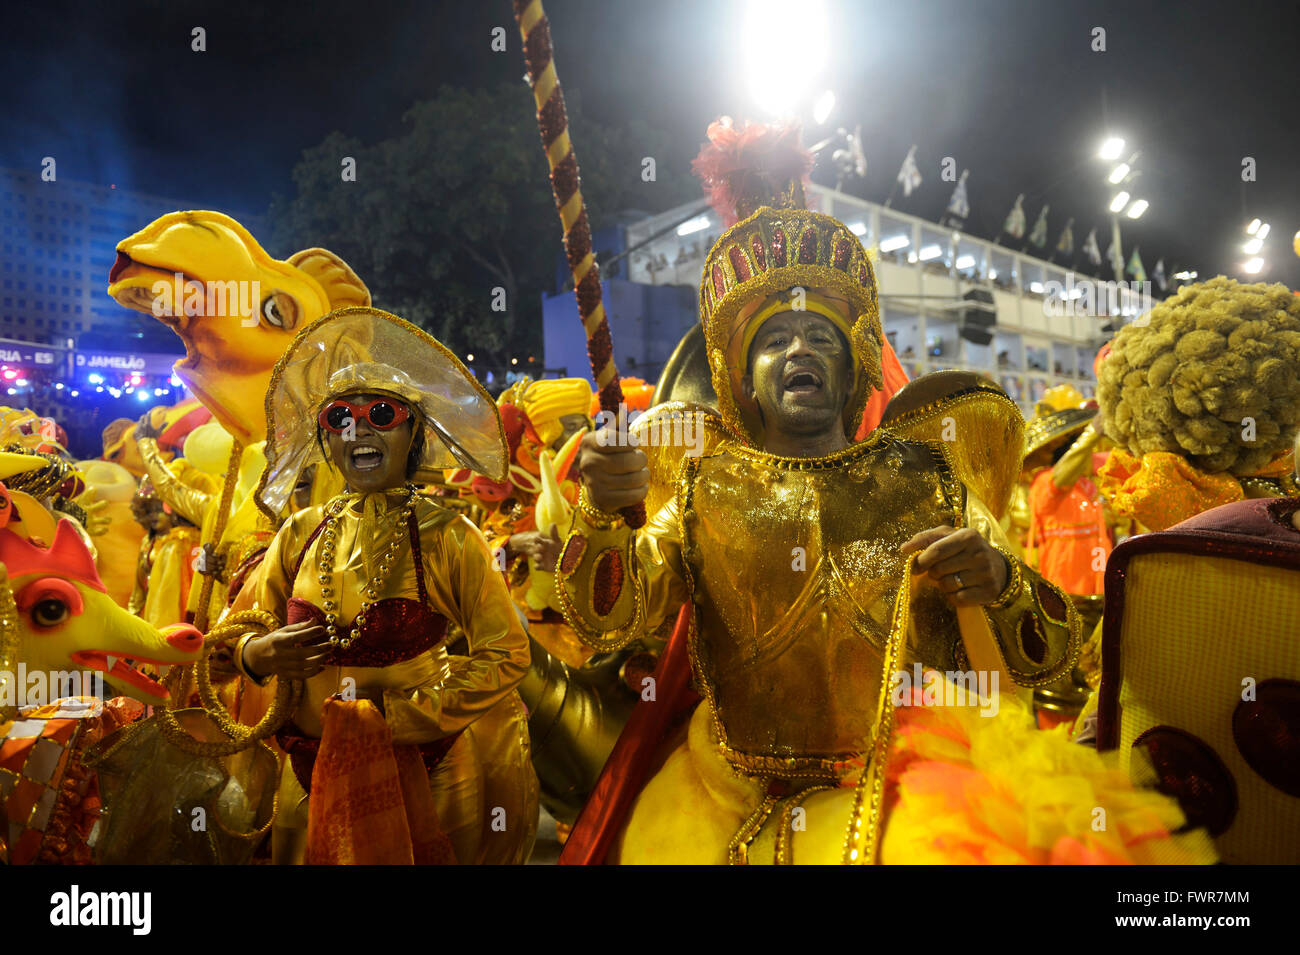 Les danseurs de samba costumés, défilé de l'école de samba Uniao da Ilha do Governador, carnaval 2016 dans le Sambadrome, Rio de Janeiro Banque D'Images